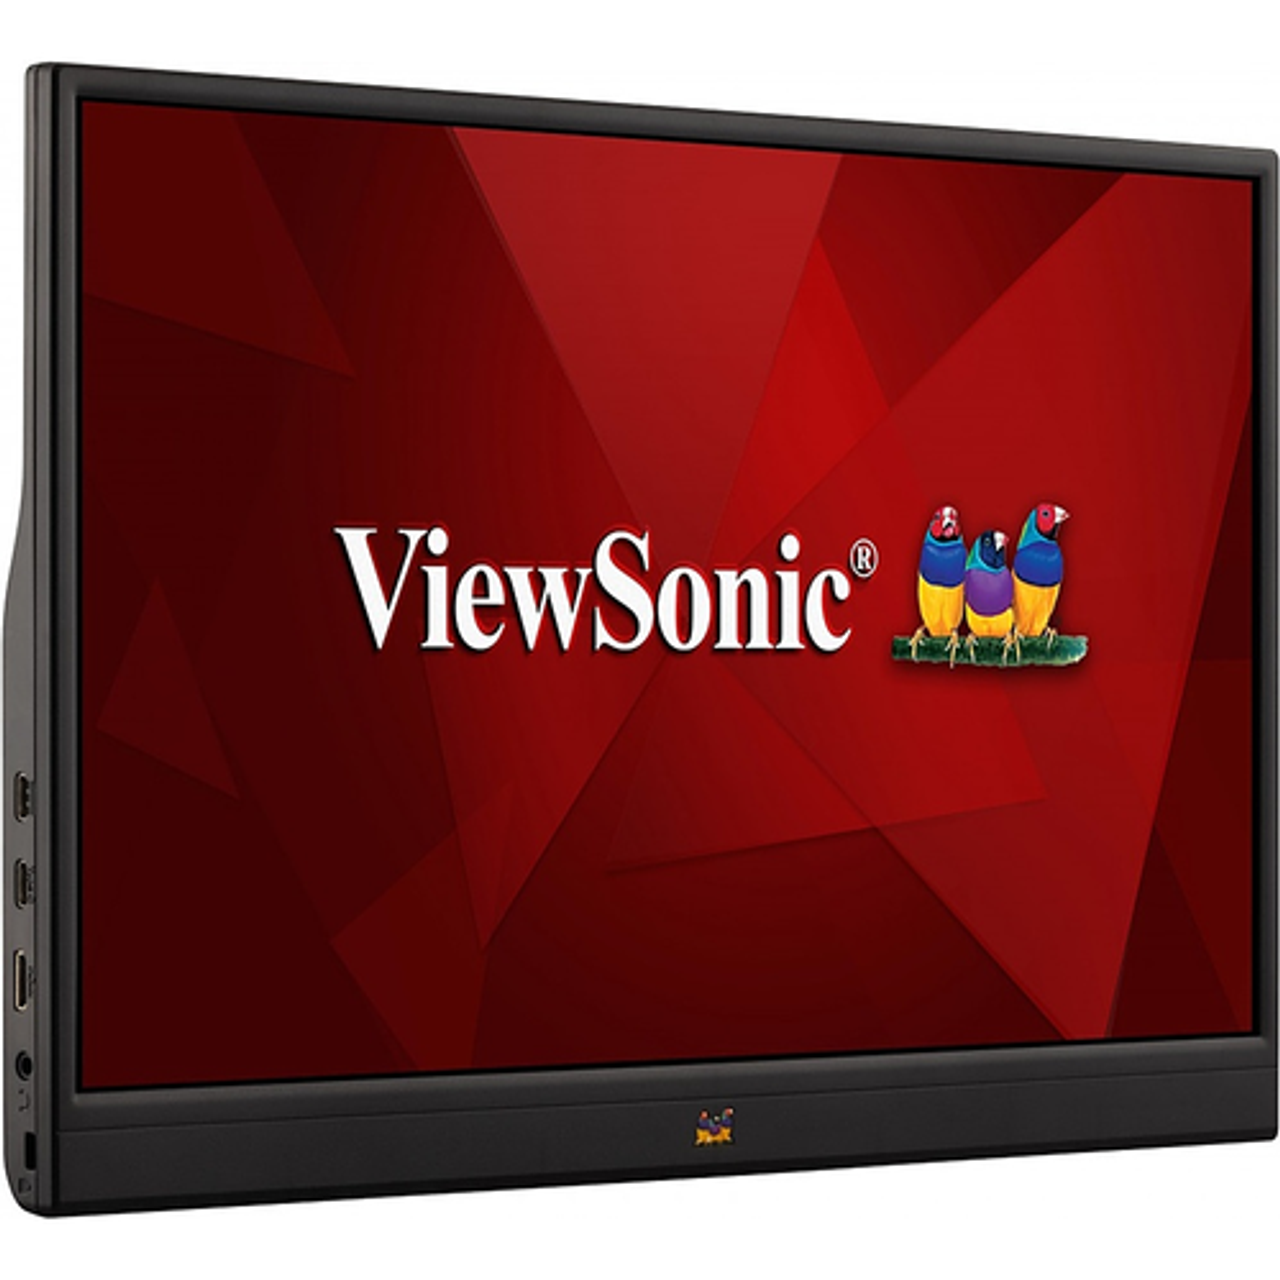 ViewSonic - 15.6 LCD FHD Monitor (DisplayPort USB, HDMI)